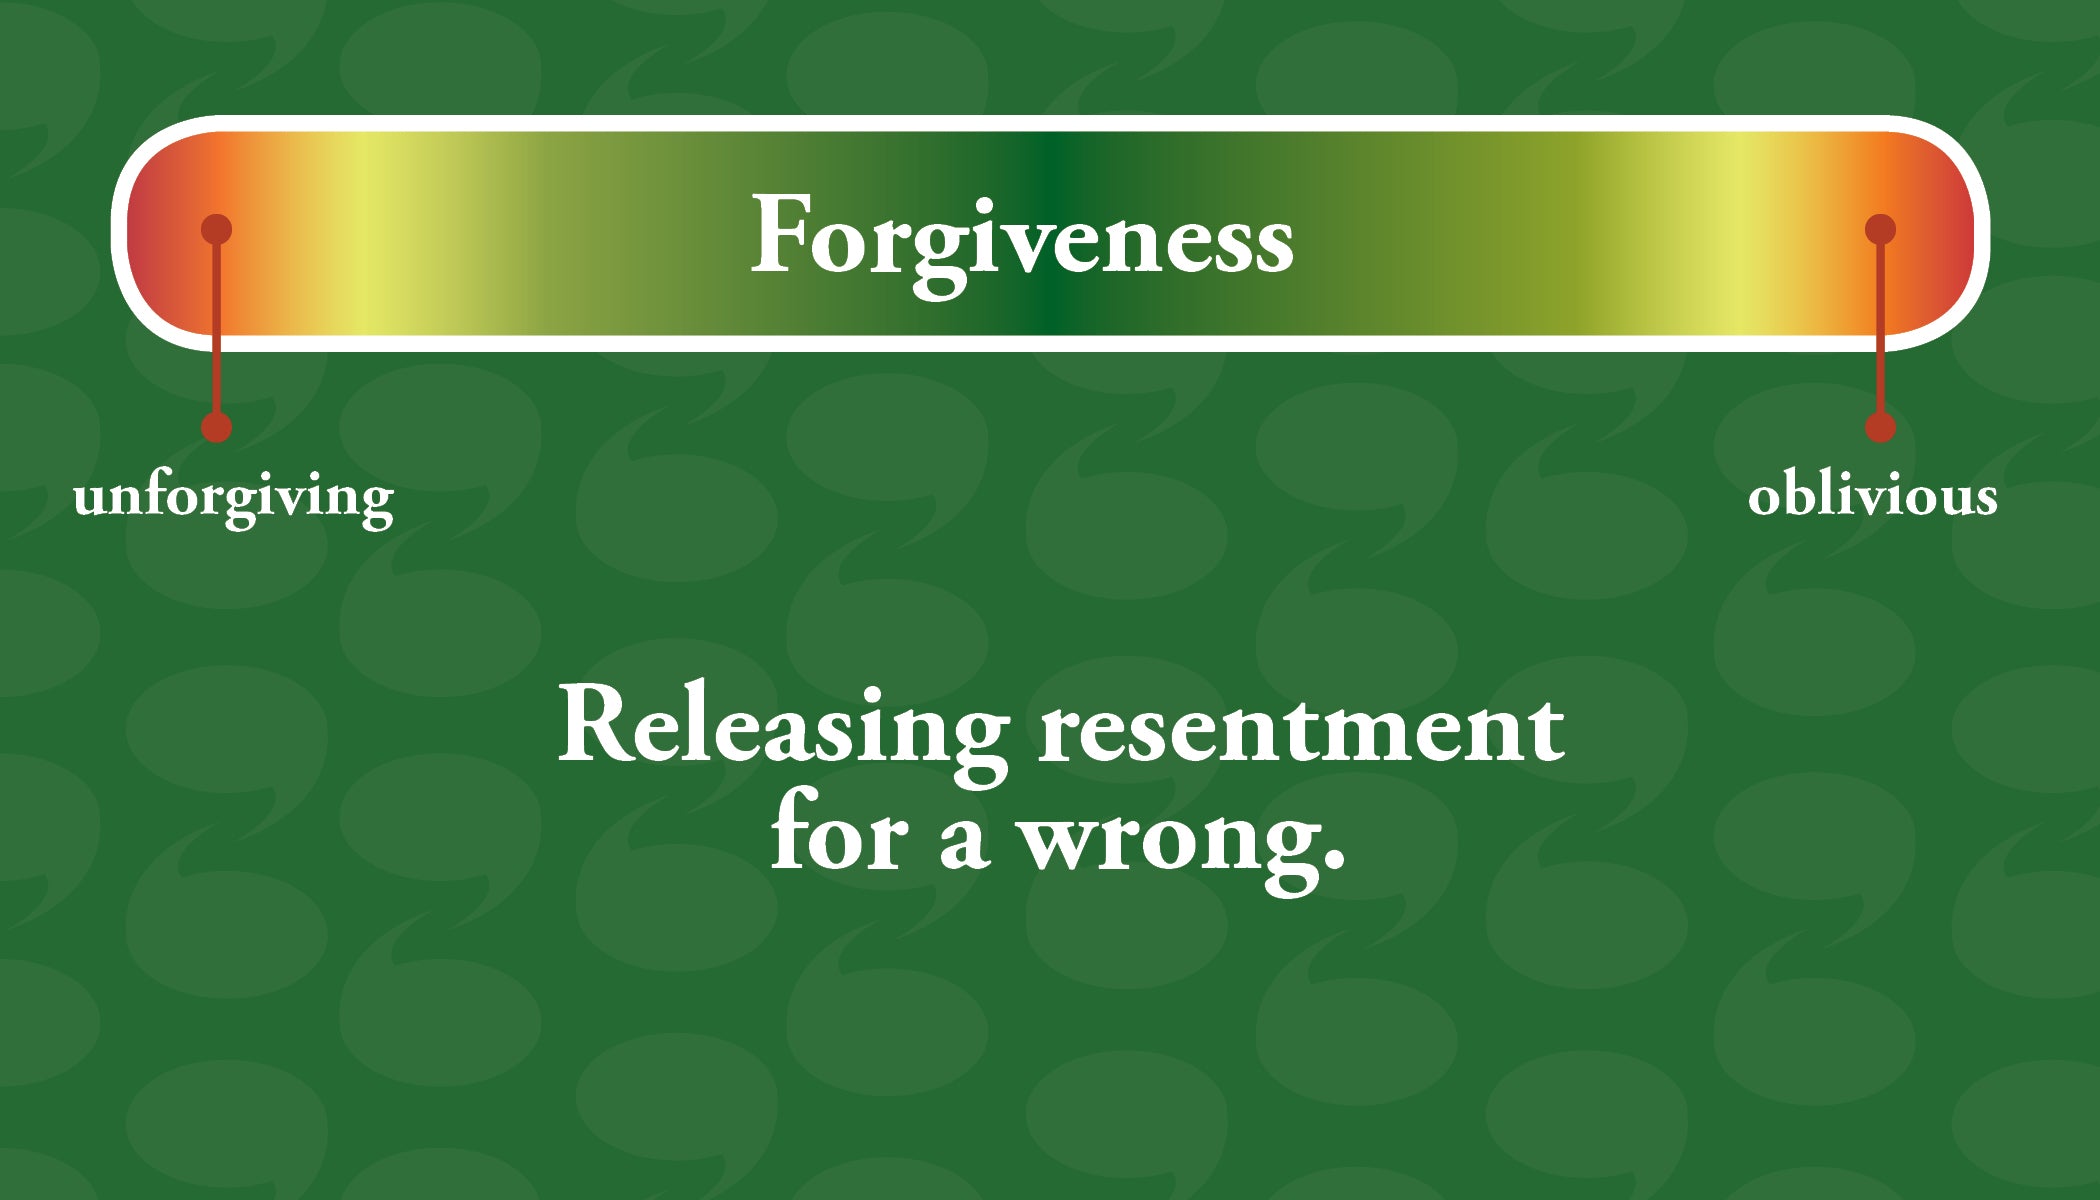 Forgiveness definition